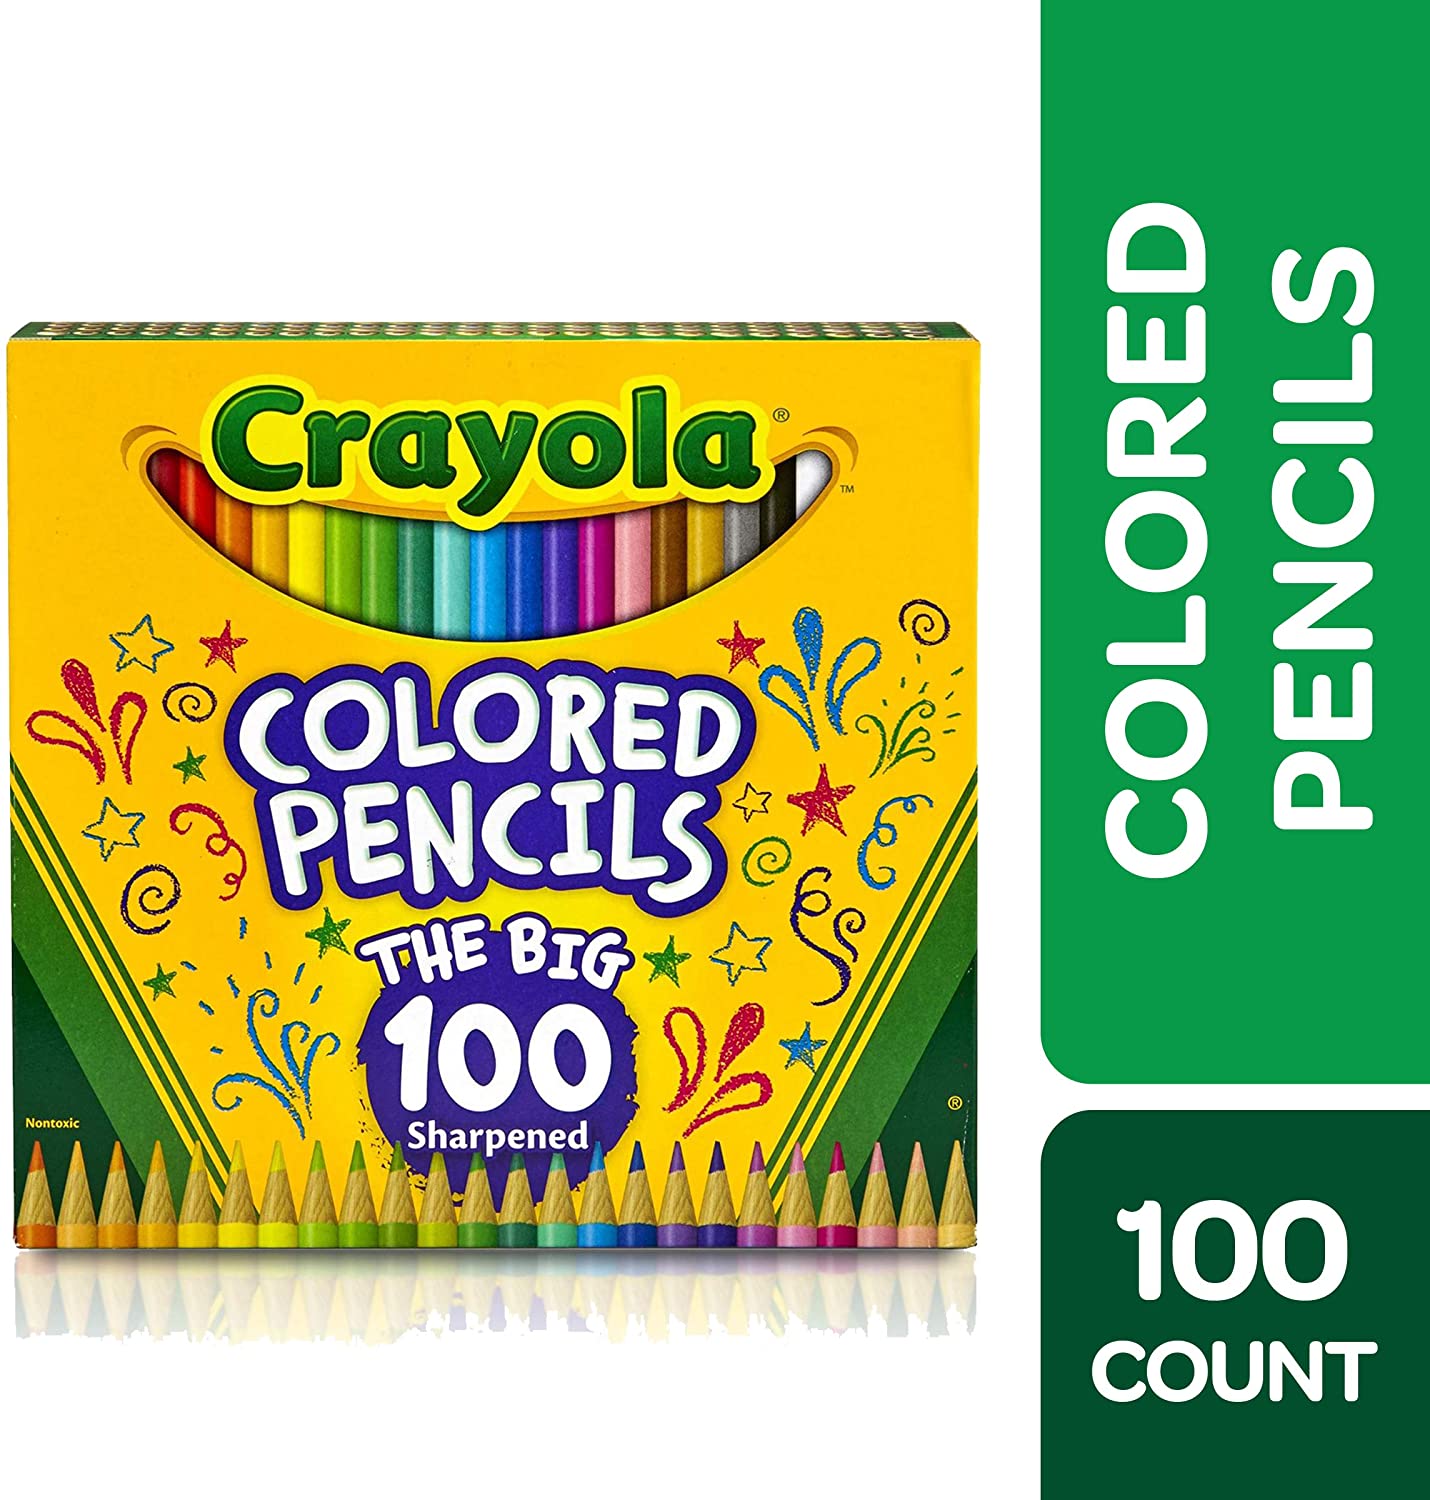 https://dealsfinders.blog/wp-content/uploads/2020/04/Crayola-Colored-Pencils-Adult-Coloring-Set-Gift-100-Count-1.jpg